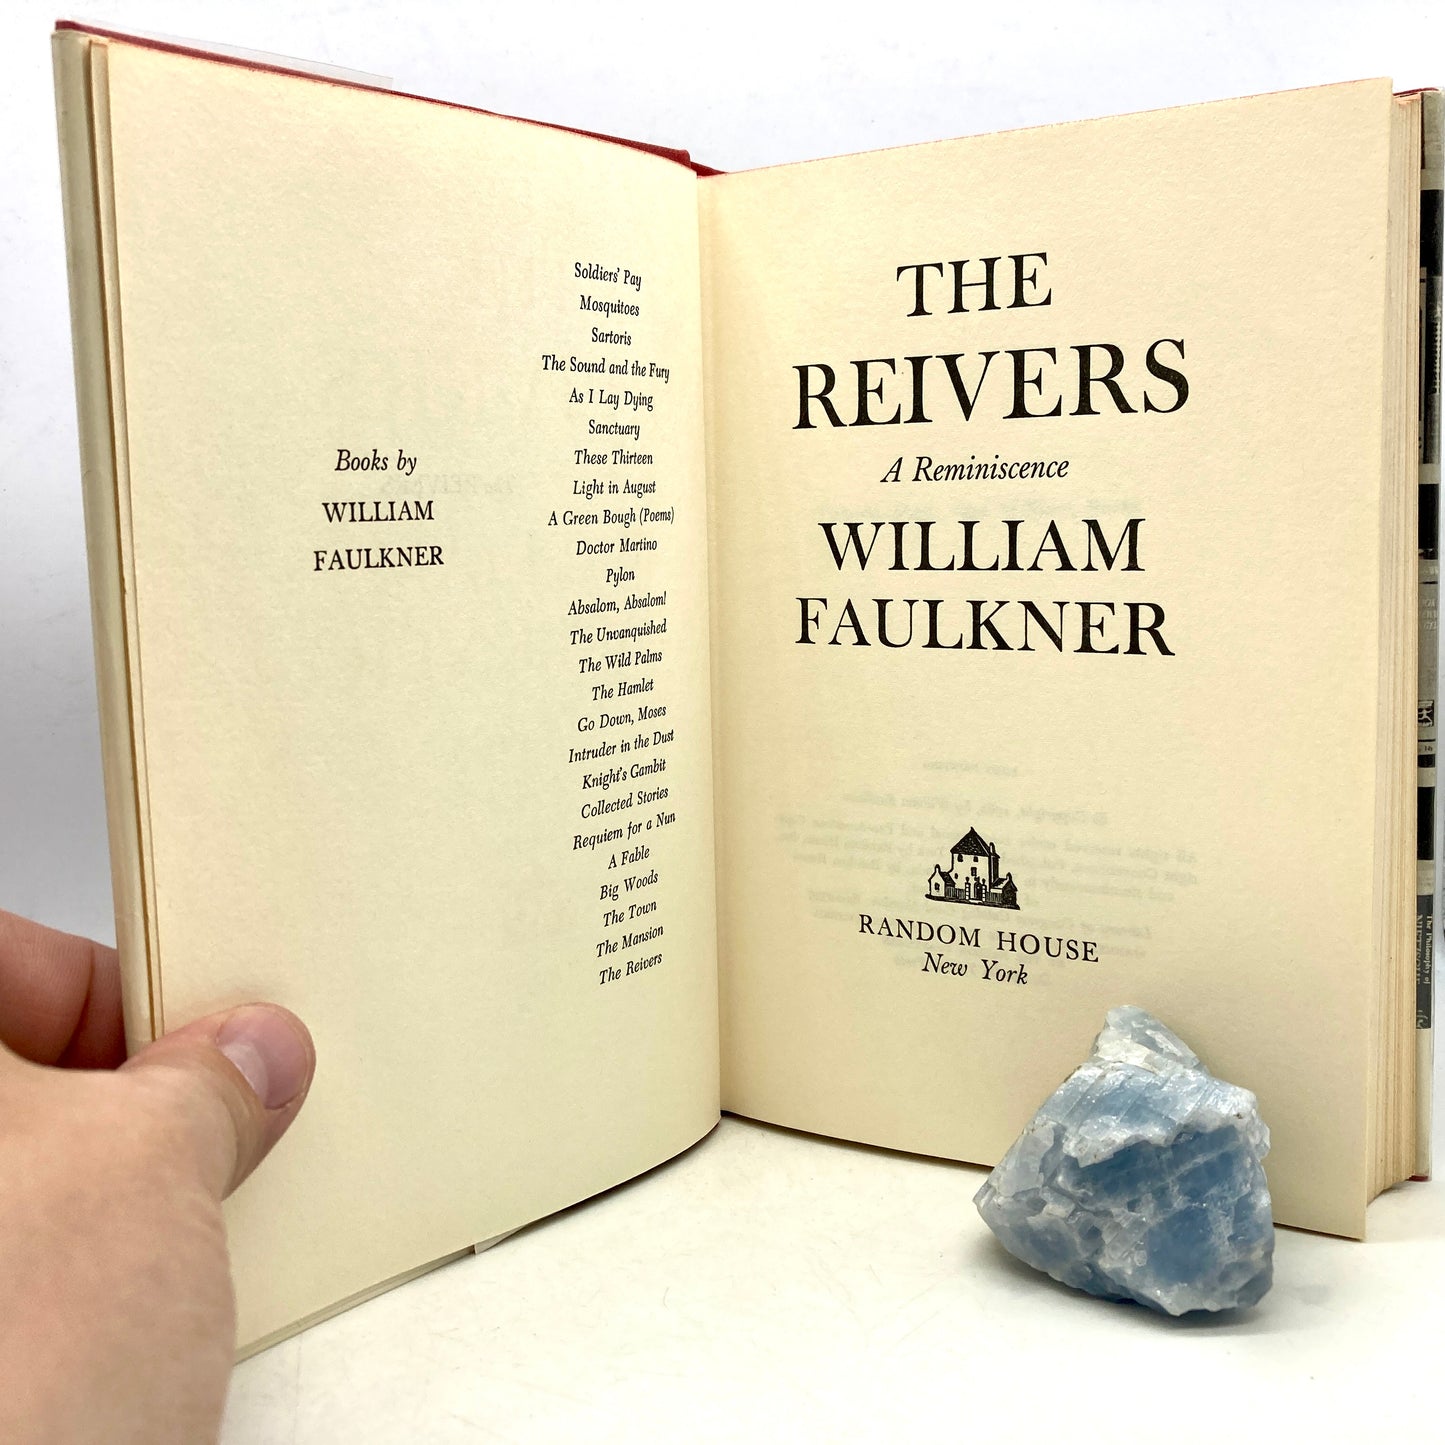 FAULKNER, William "The Reivers" [Random House, 1962]